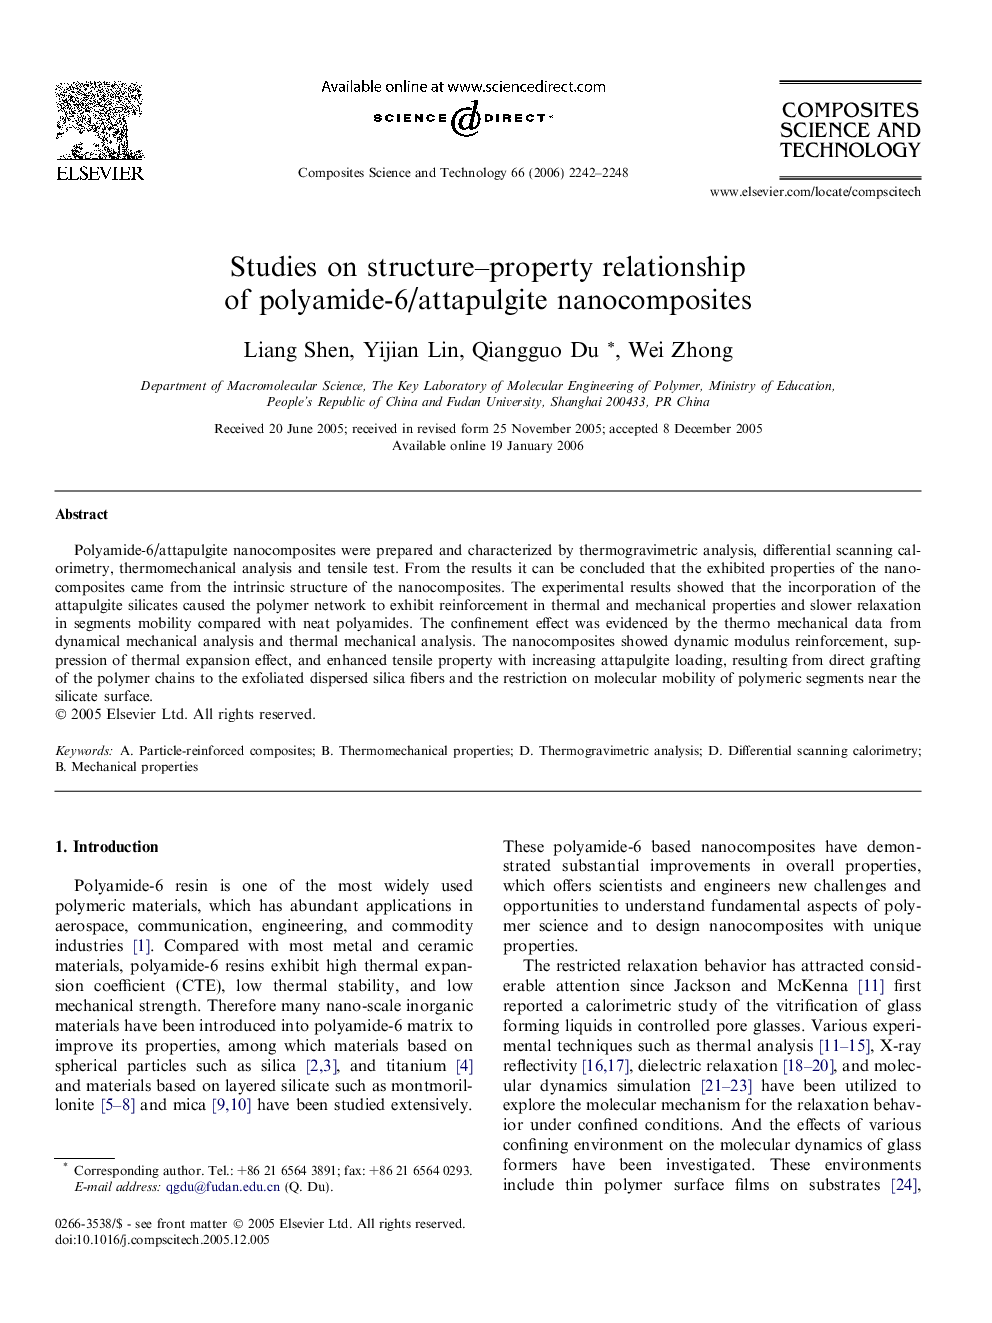 Studies on structure–property relationship of polyamide-6/attapulgite nanocomposites